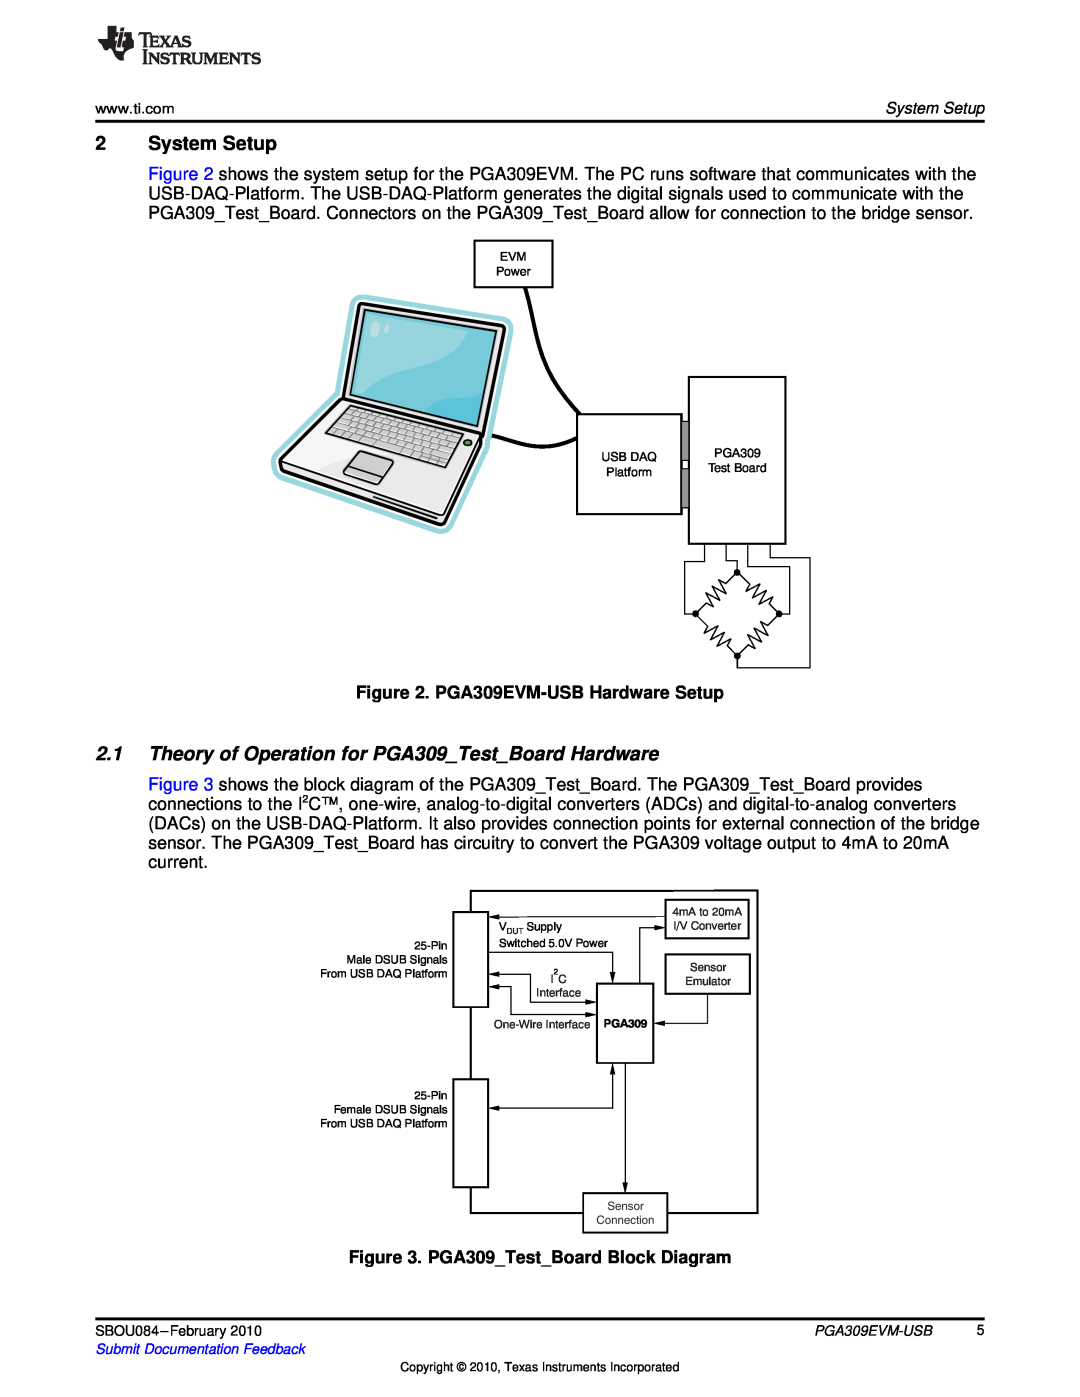 Texas Instruments PGA309EVM-USB manual System Setup, Theory of Operation for PGA309TestBoard Hardware 